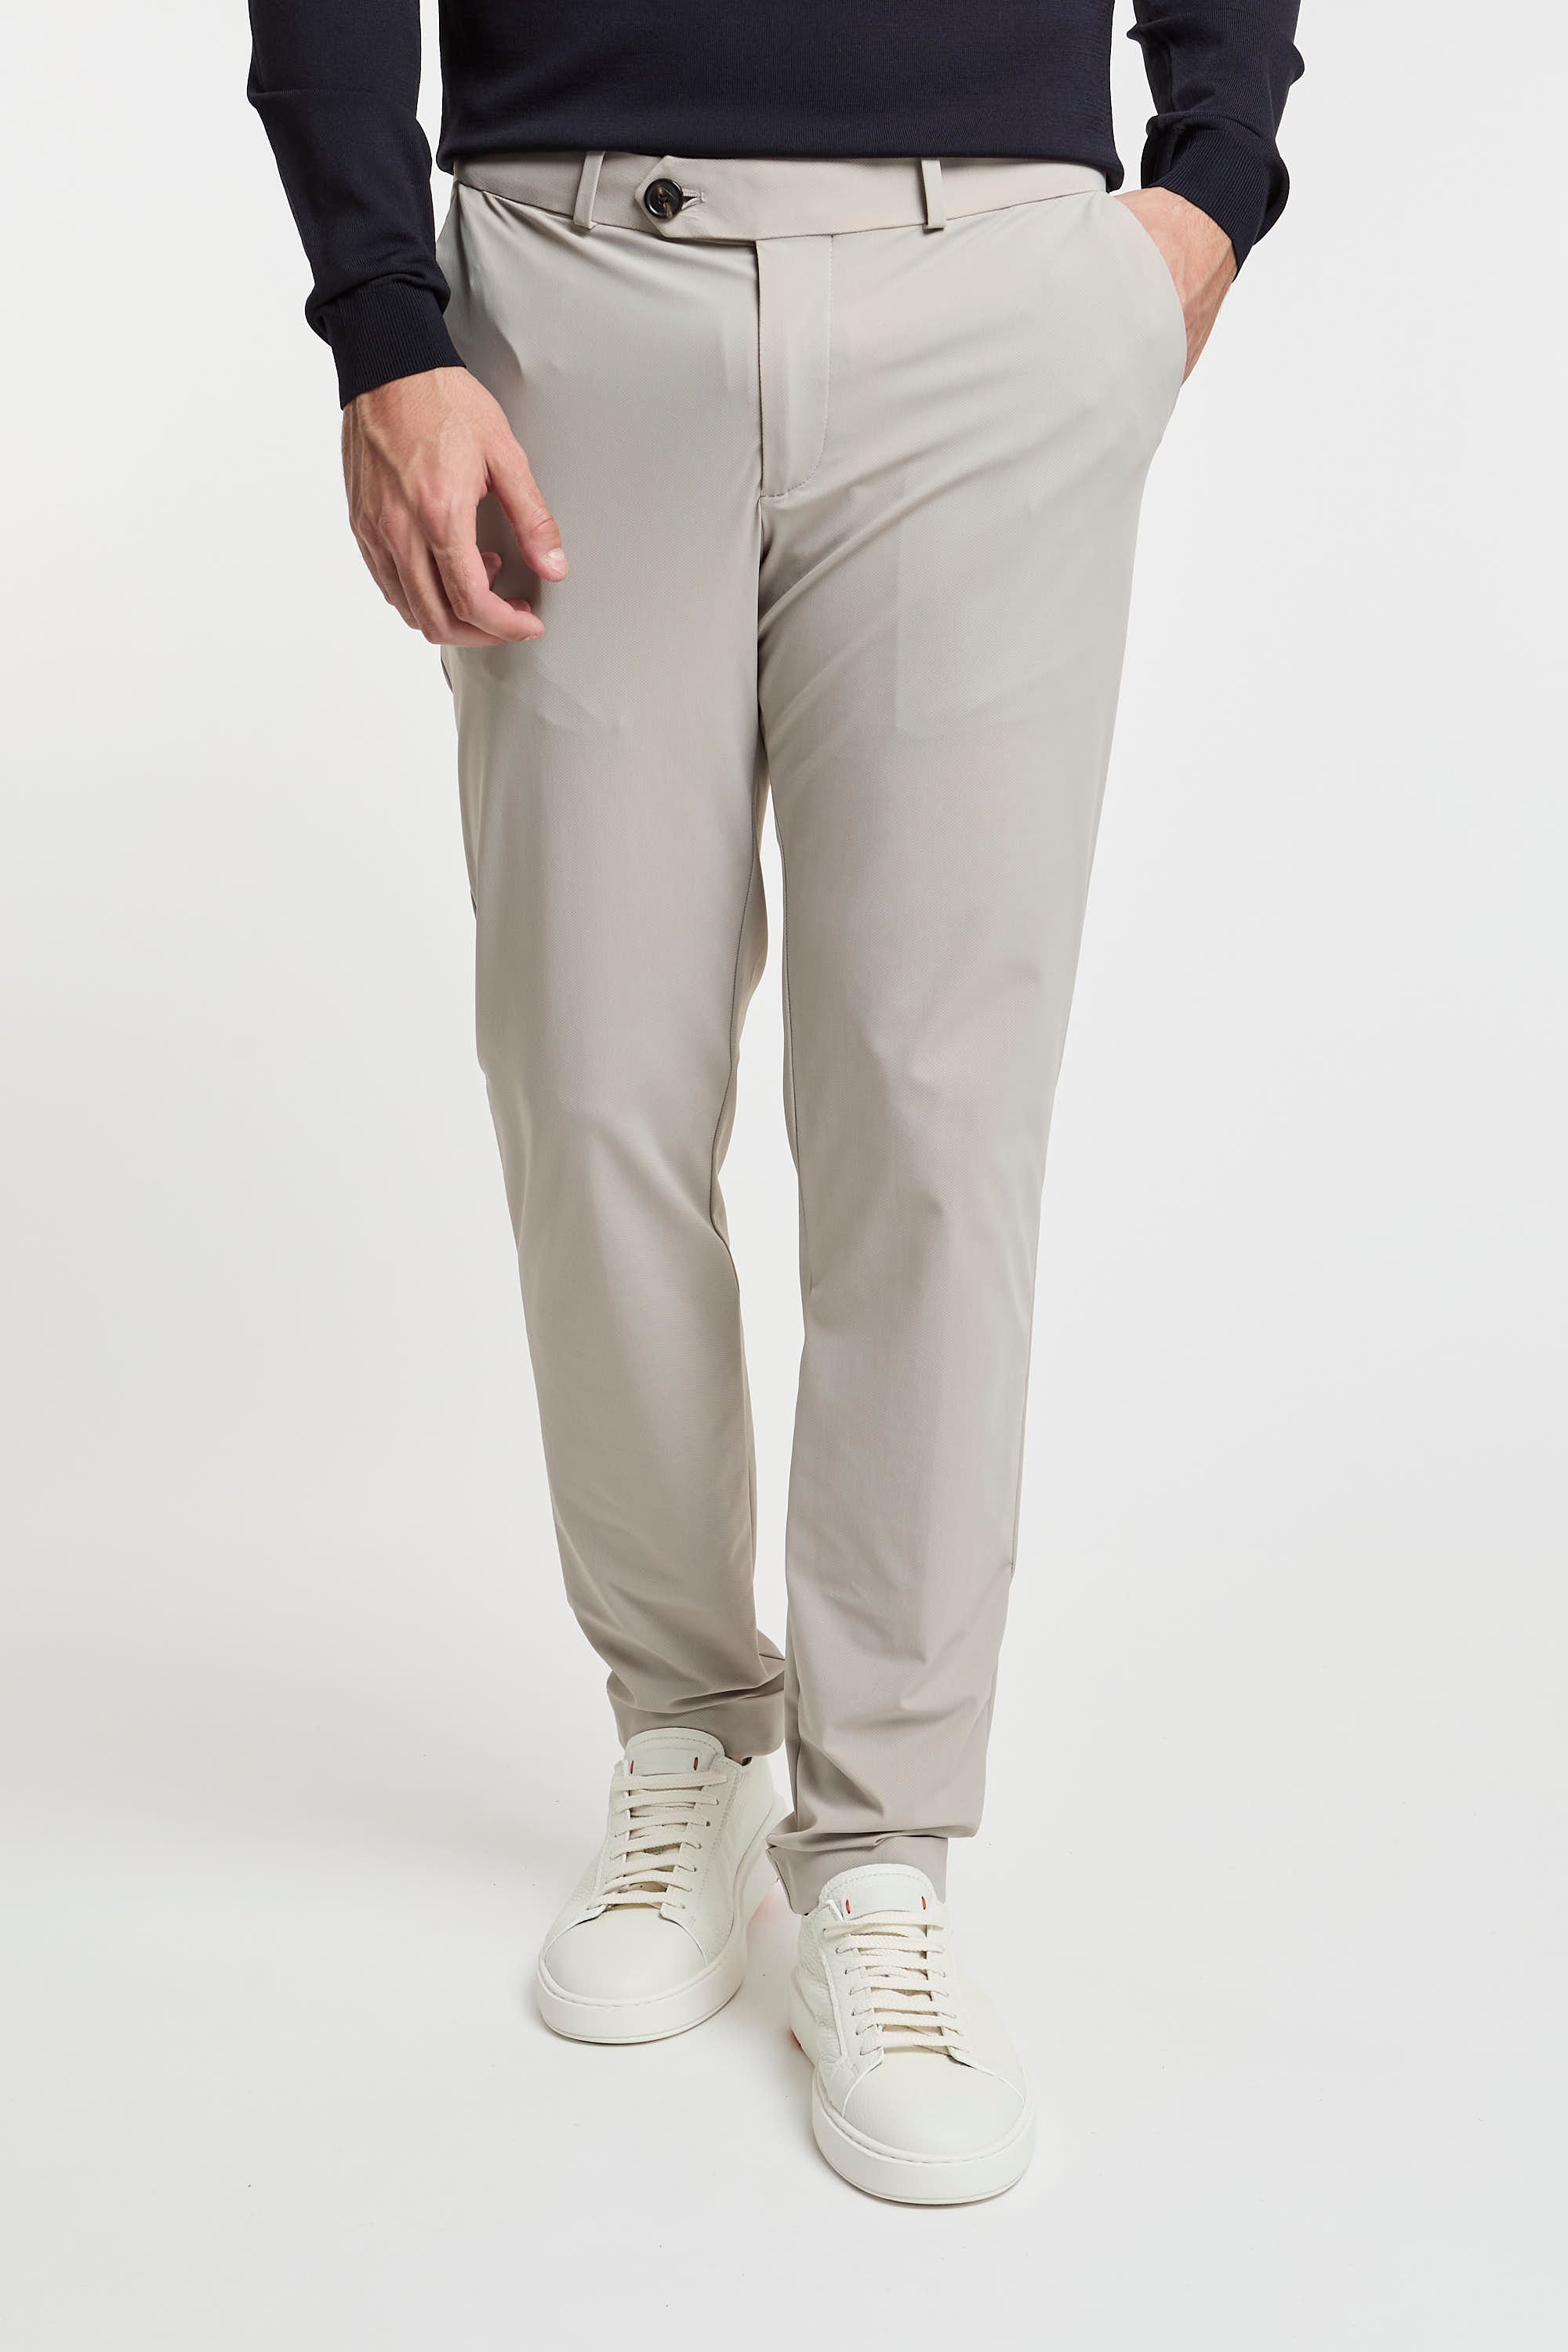 Pantalone Micro Chino-1